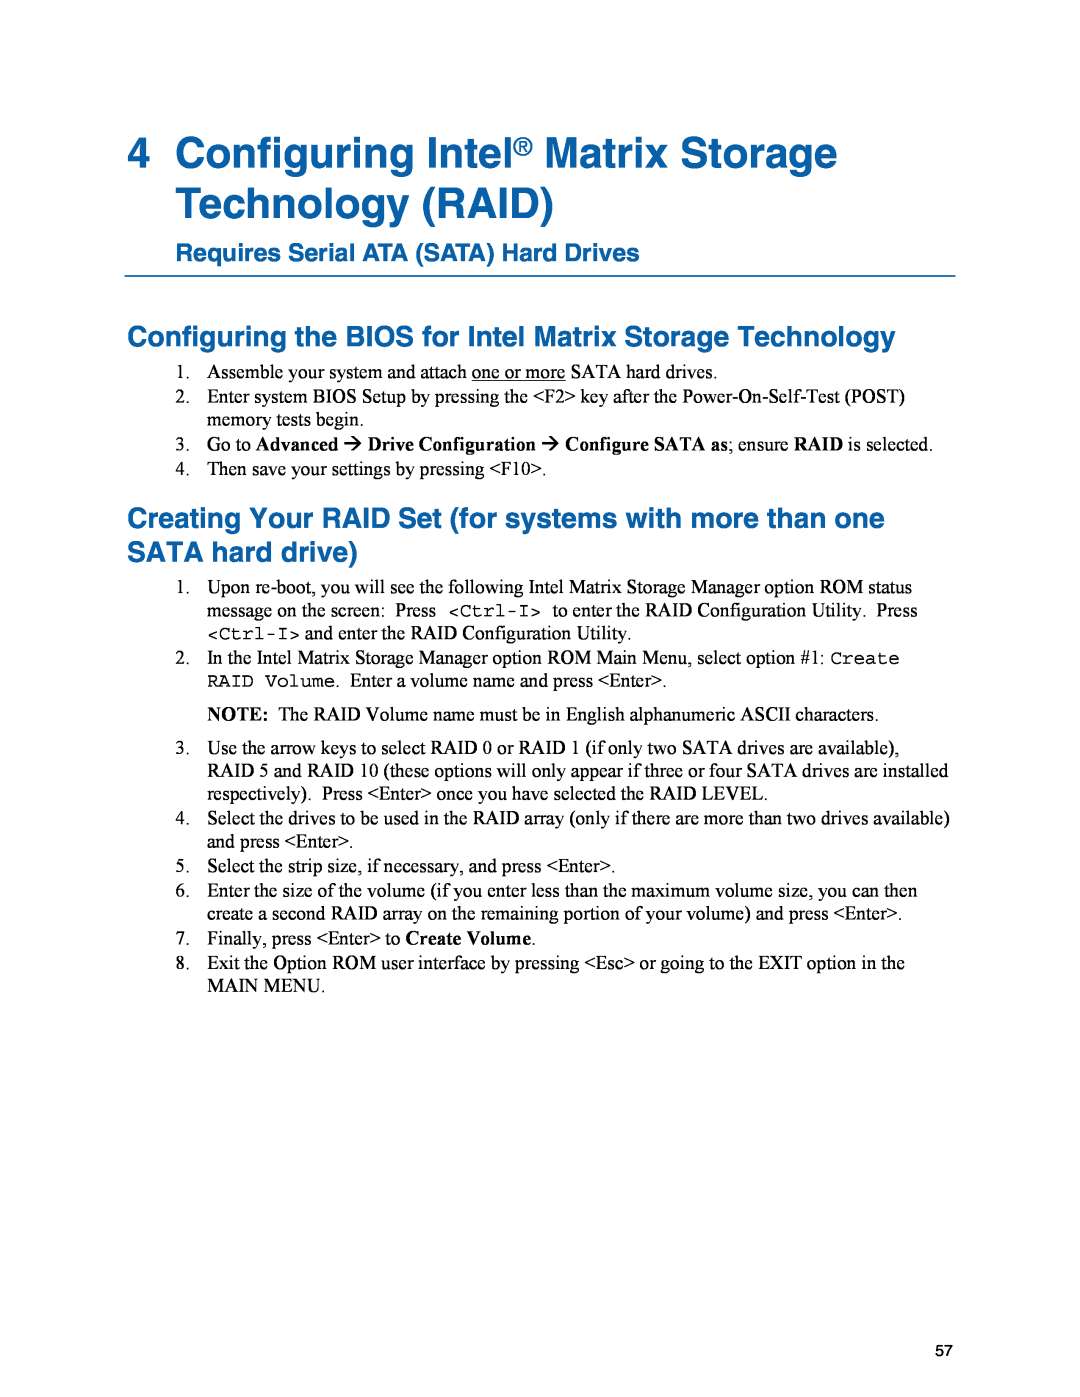 Intel D945GPM Configuring Intel Matrix Storage Technology RAID, Configuring the BIOS for Intel Matrix Storage Technology 